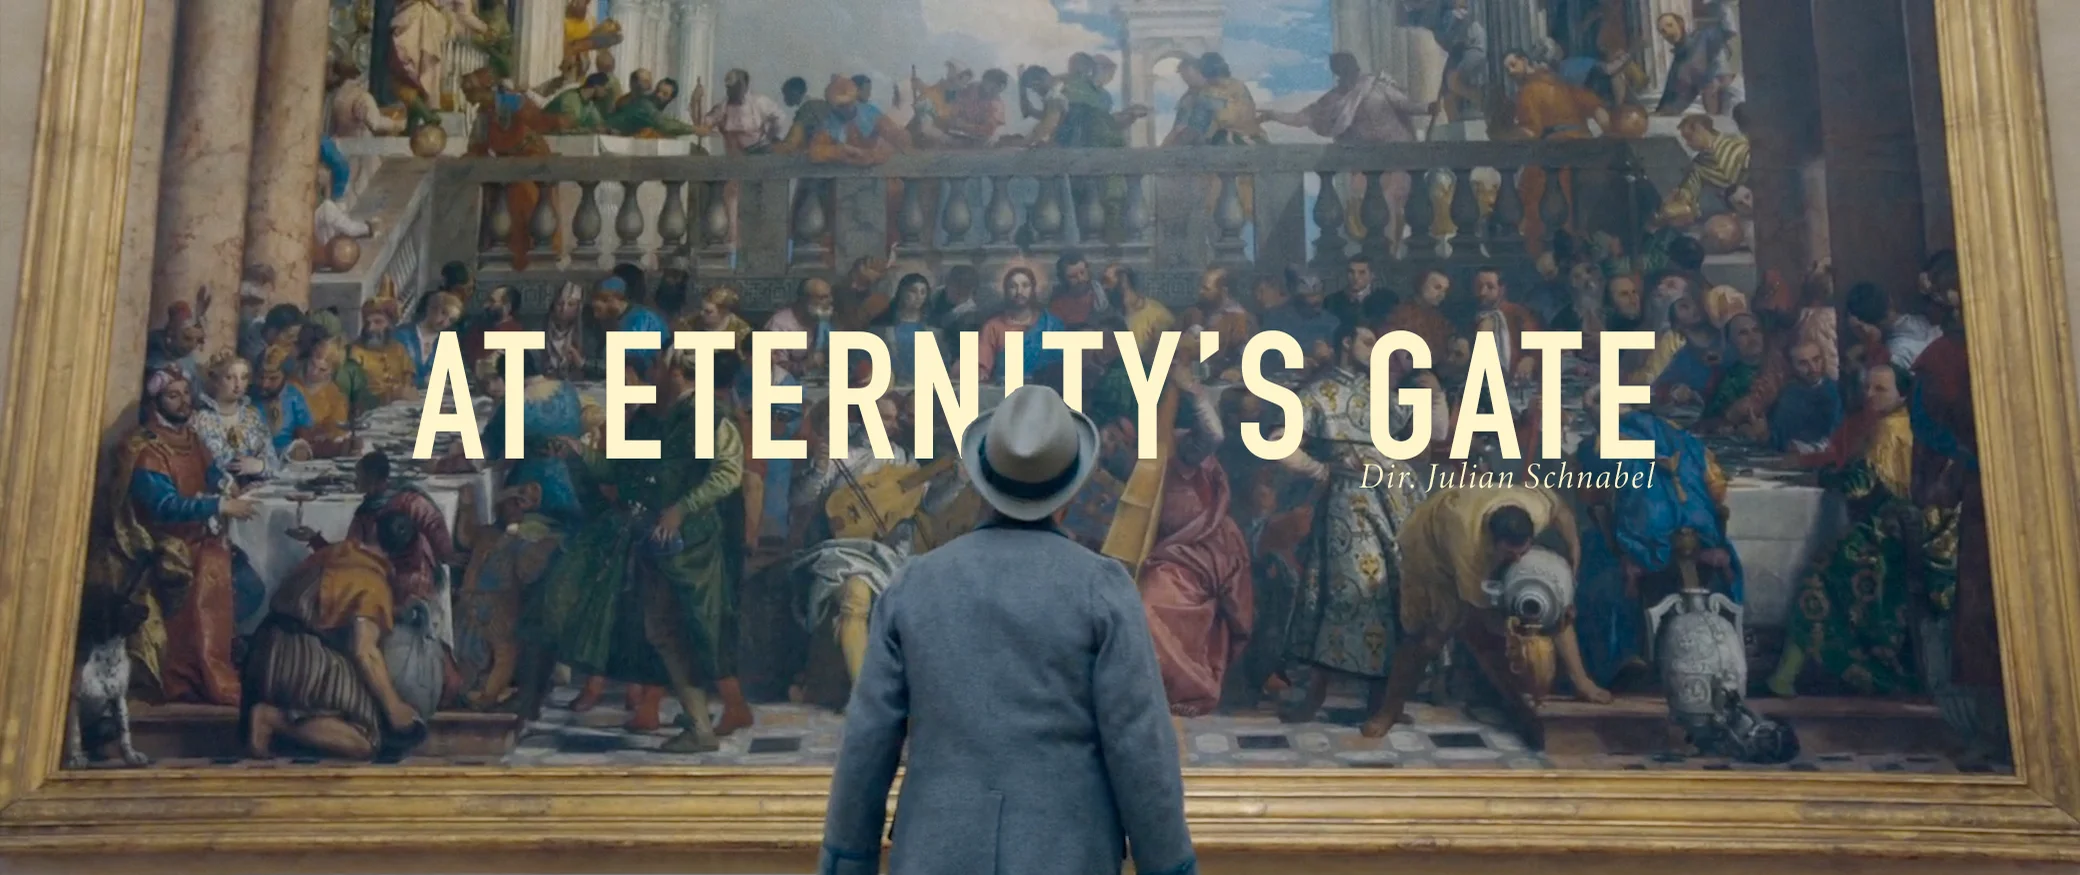 Willem Dafoe At Eternity's Gate